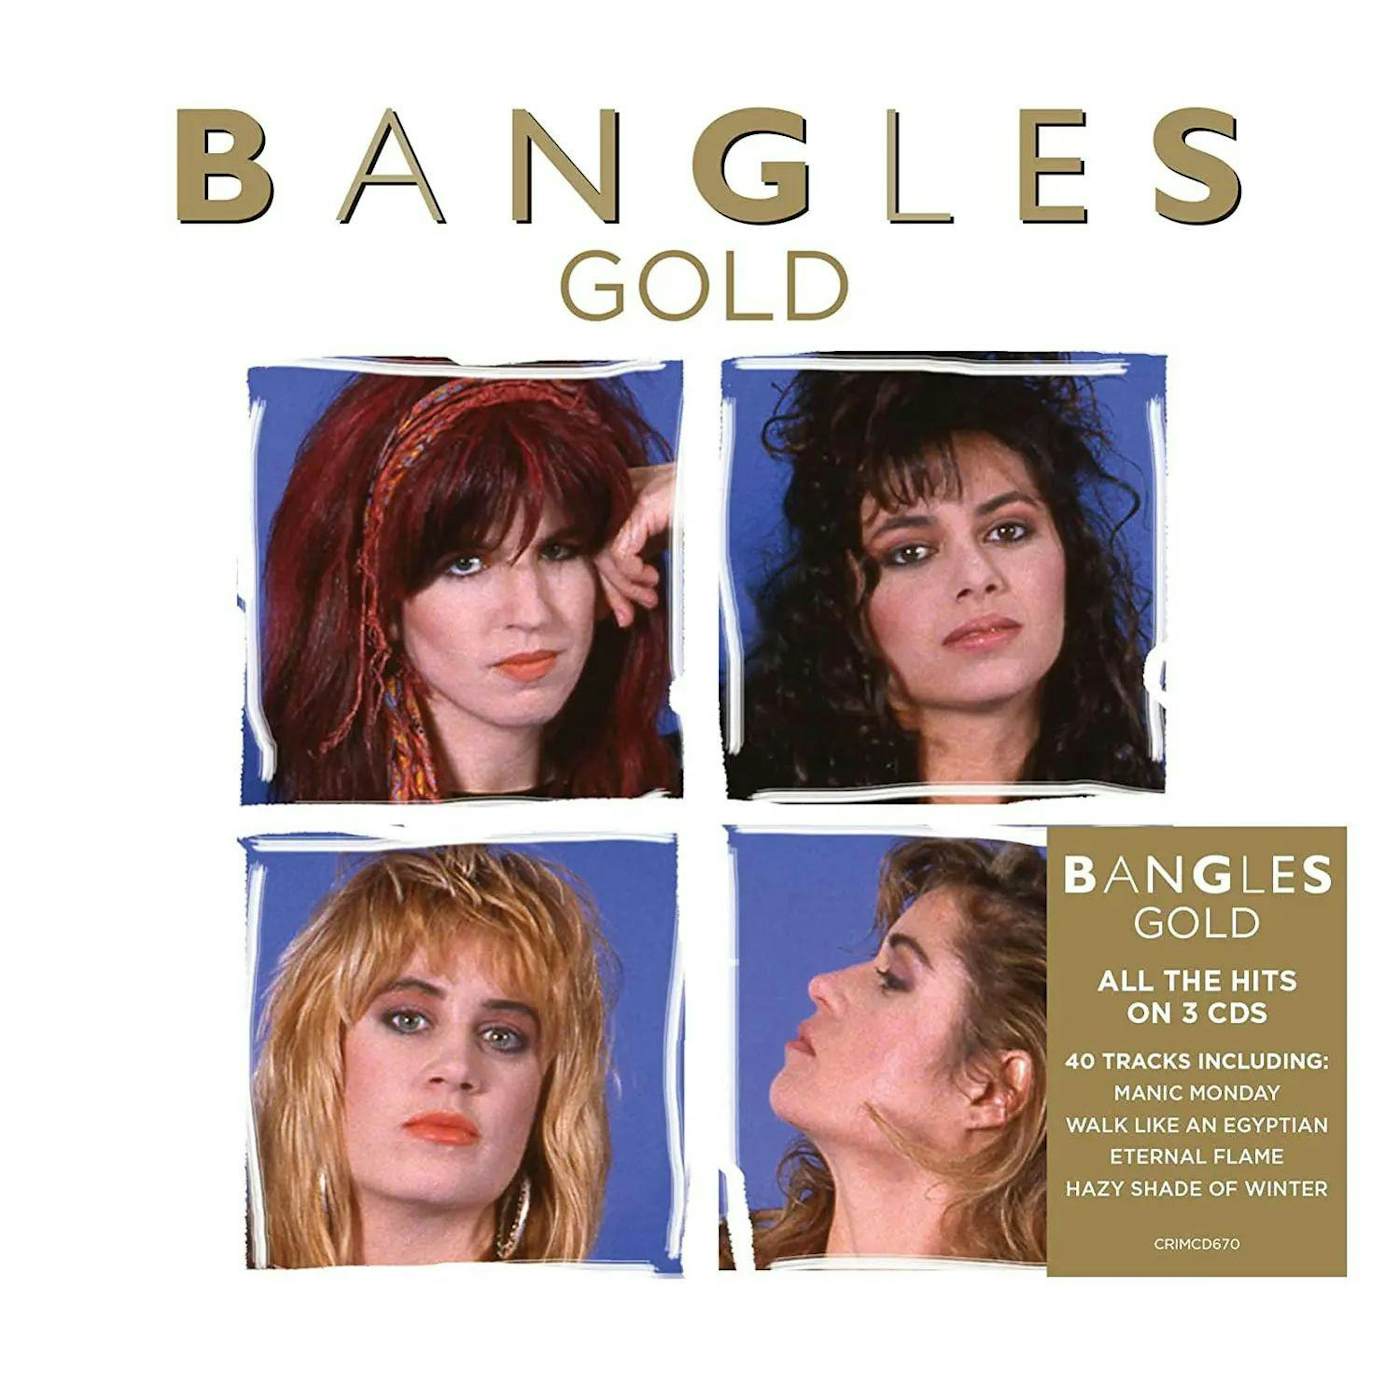 The Bangles Gold Vinyl Record